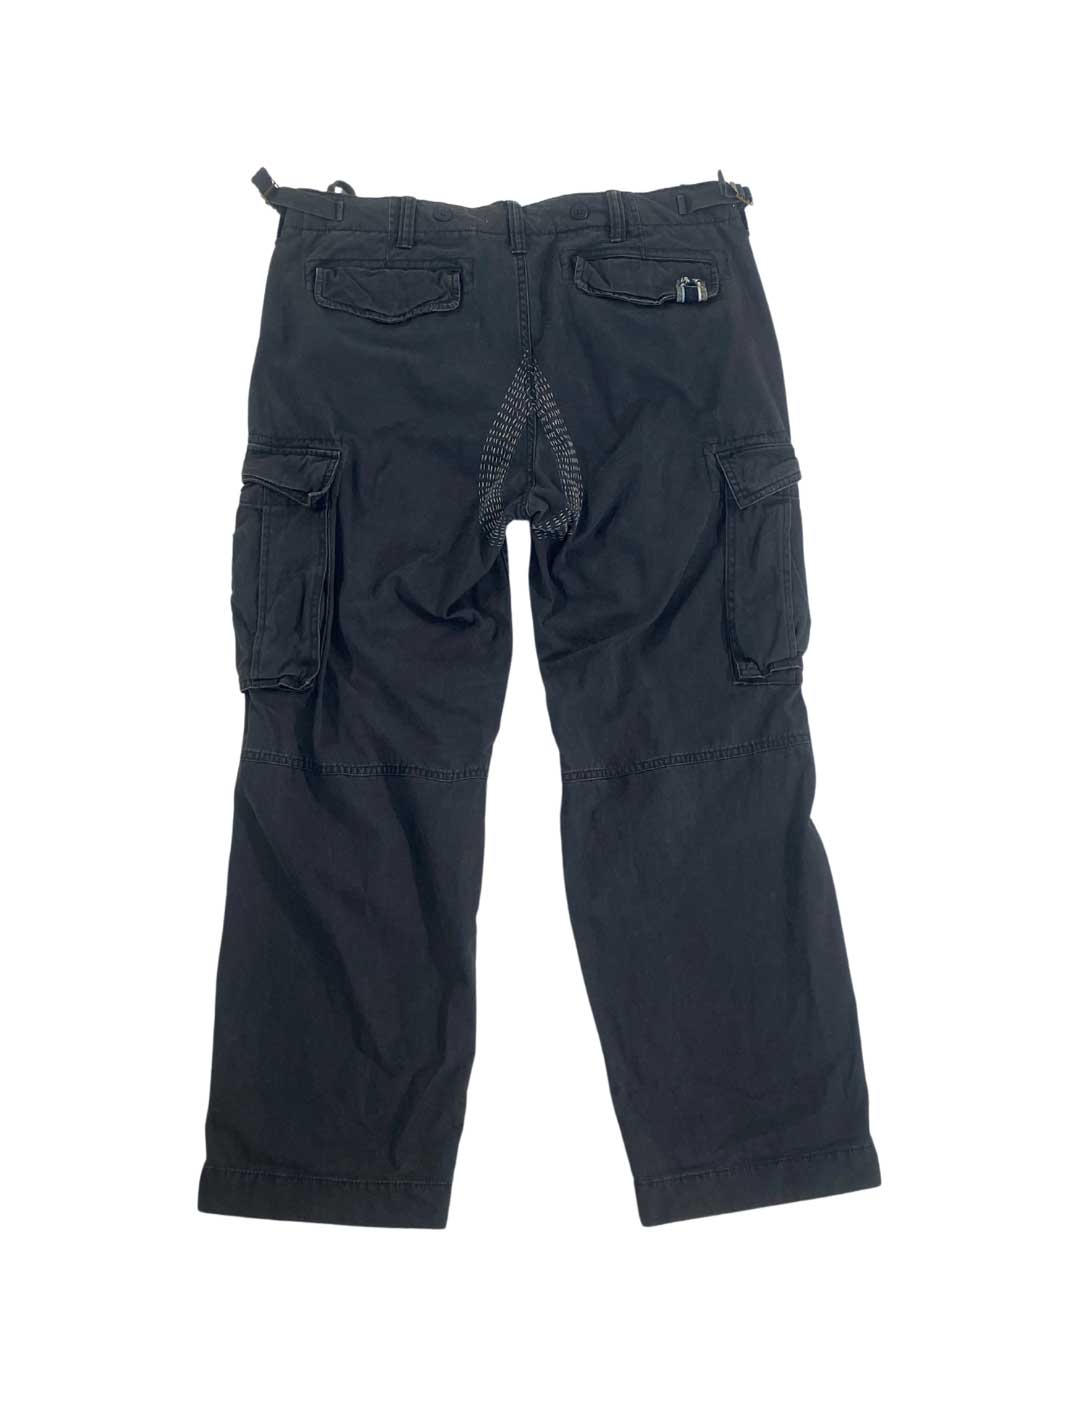 Männer Vintage Cargo Hose relaxed fit Größe 33/32 dunkelblau mehrfach per Handstich über Sattel